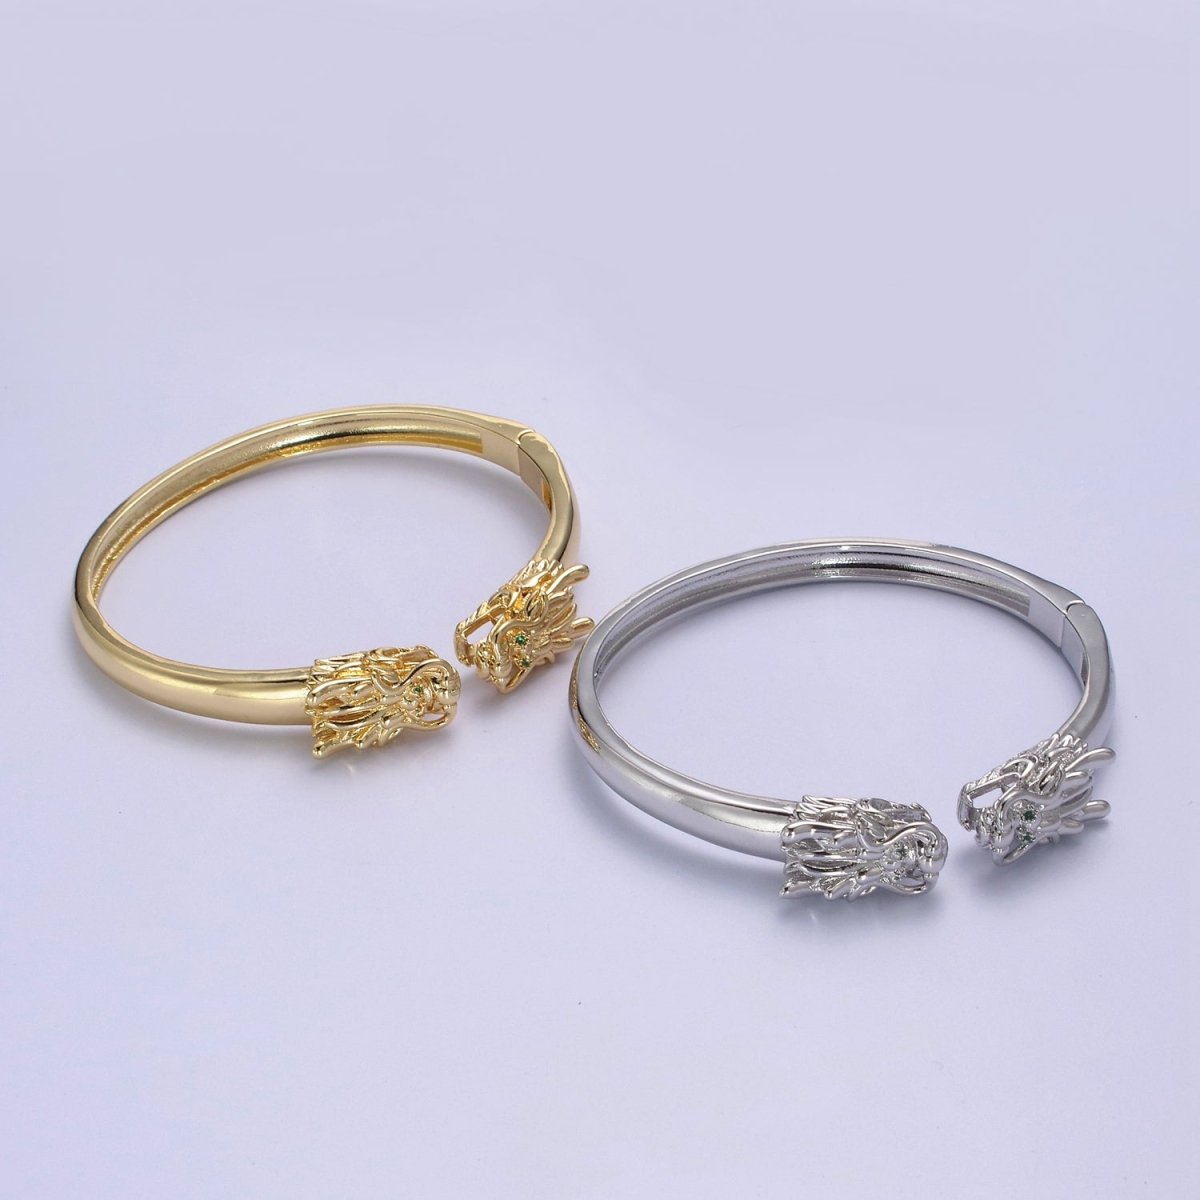 Double Dragon Head Bracelet - Adjustable Bangle bracelet - Lucky Dragon Bangle Stackable Jewelry | WA-686 WA-687 Clearance Pricing - DLUXCA